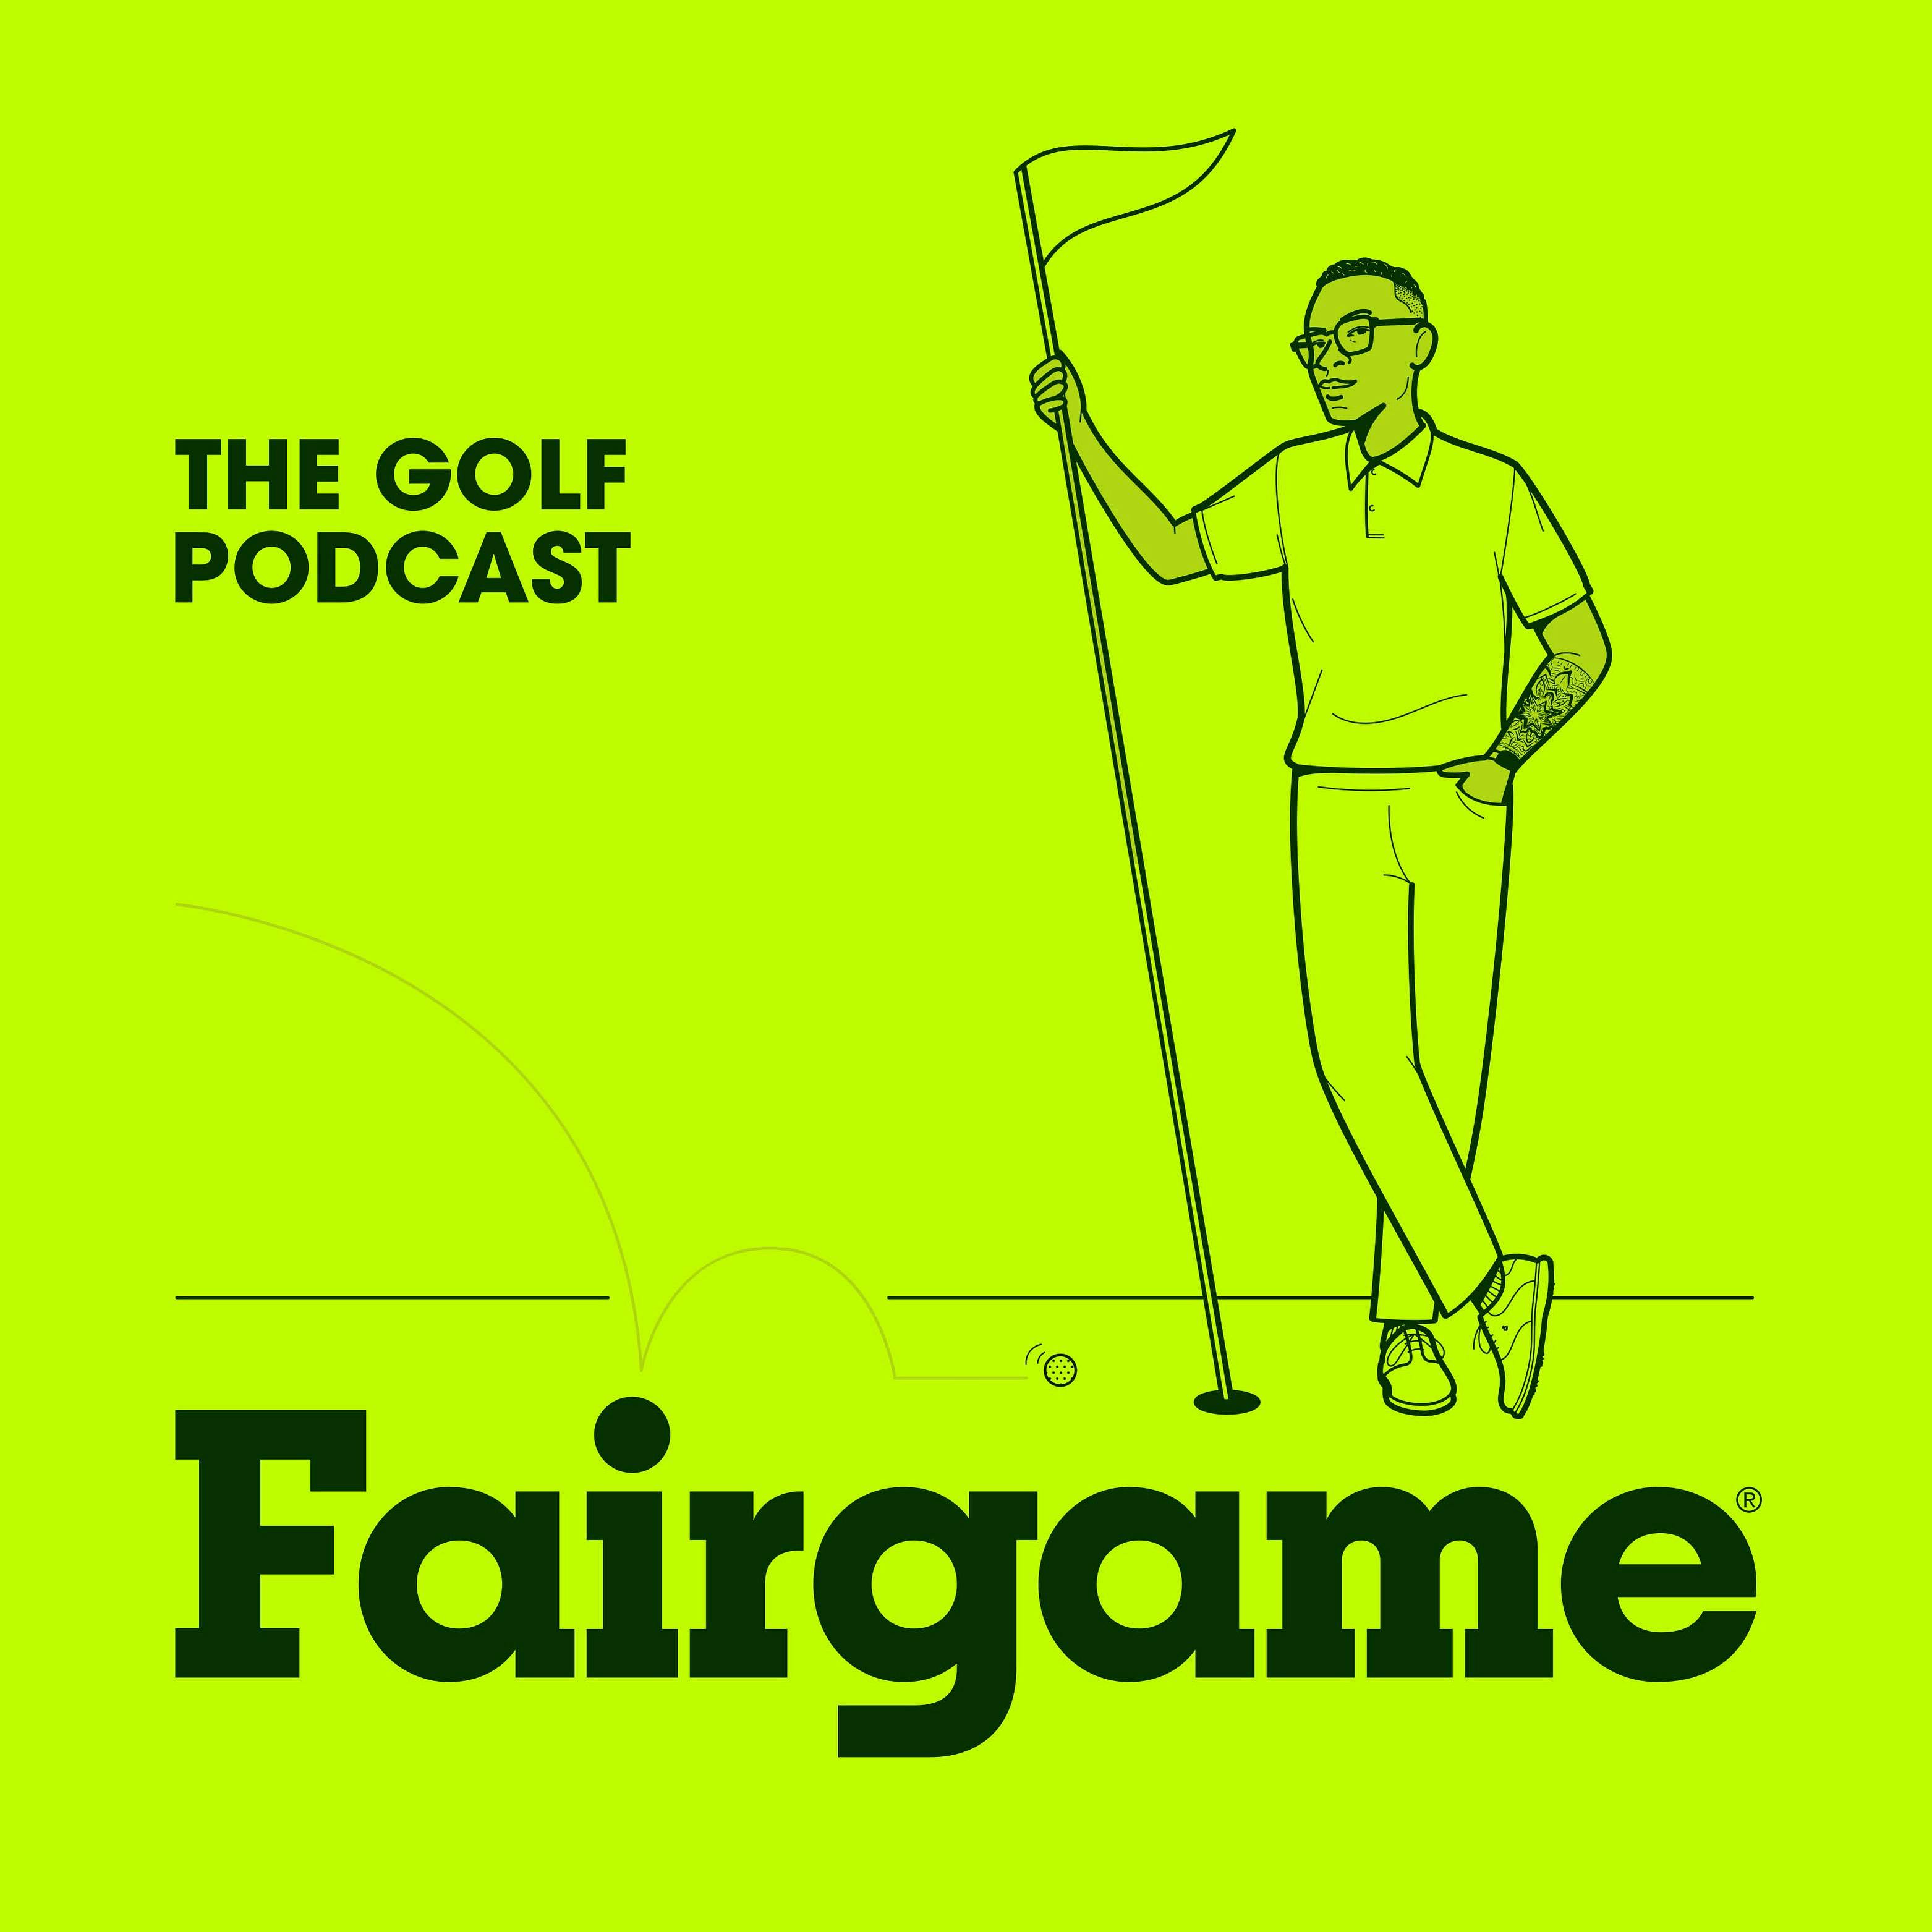 Episode 16: Golf as an Artful Outlet